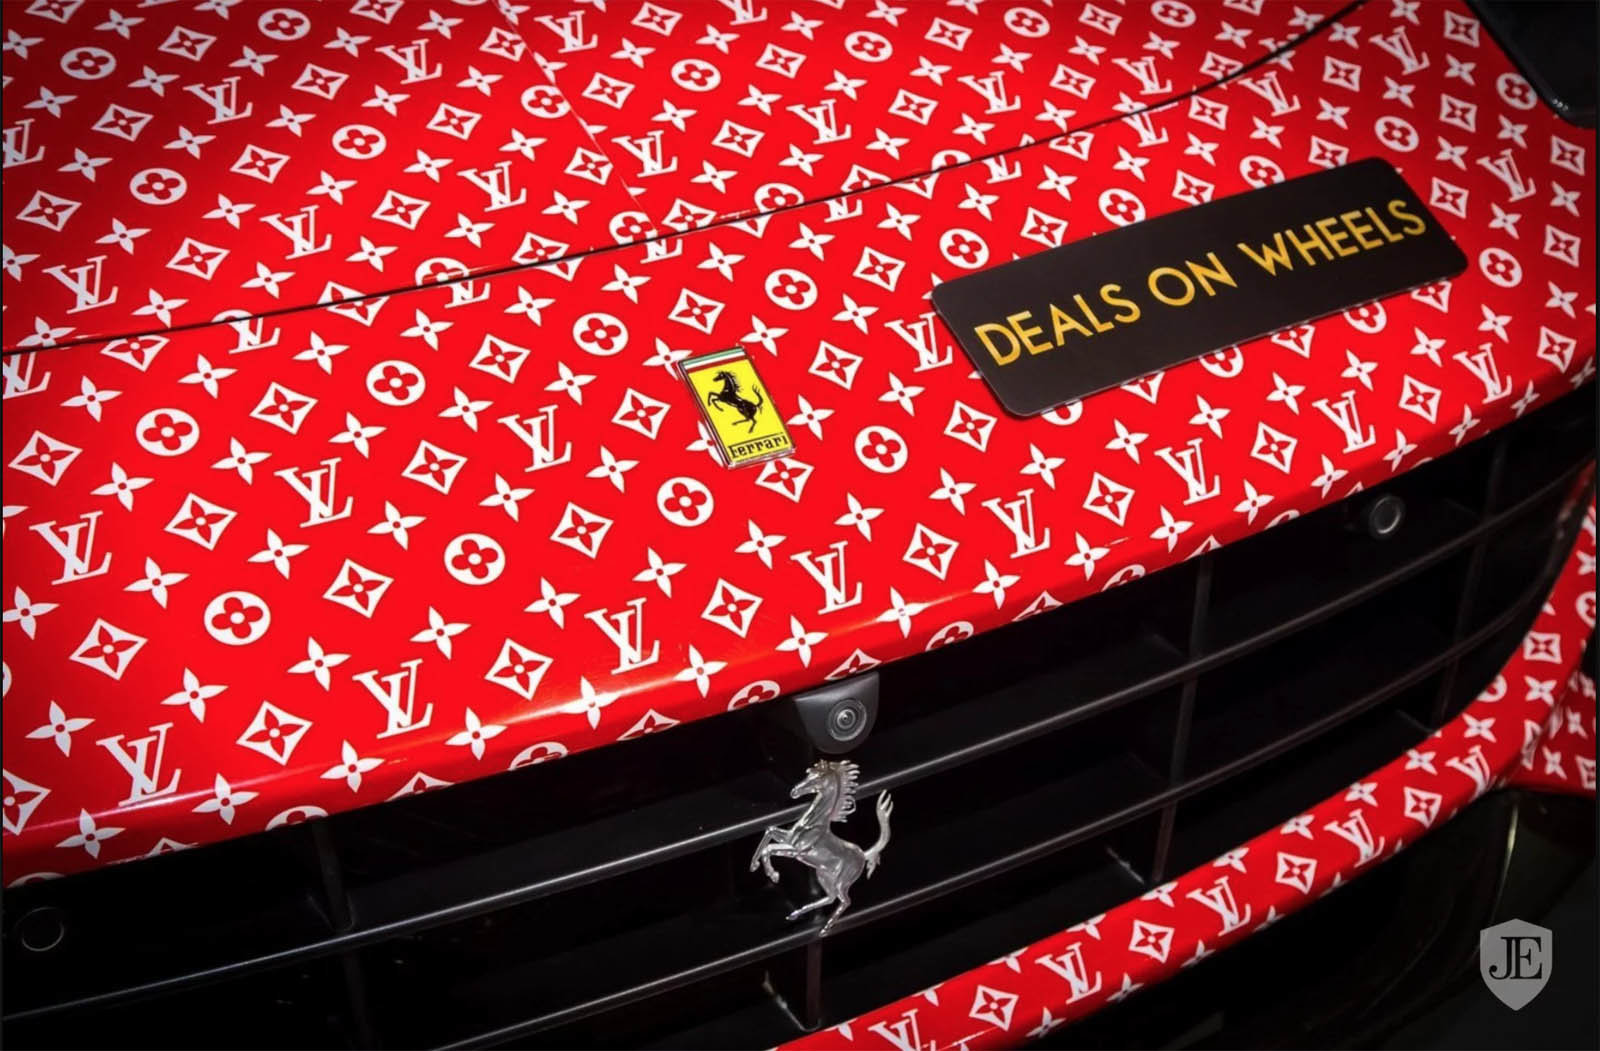 Ferrari f12 Berlinetta v exkluzivním polepu Supreme/Louis Vuitton